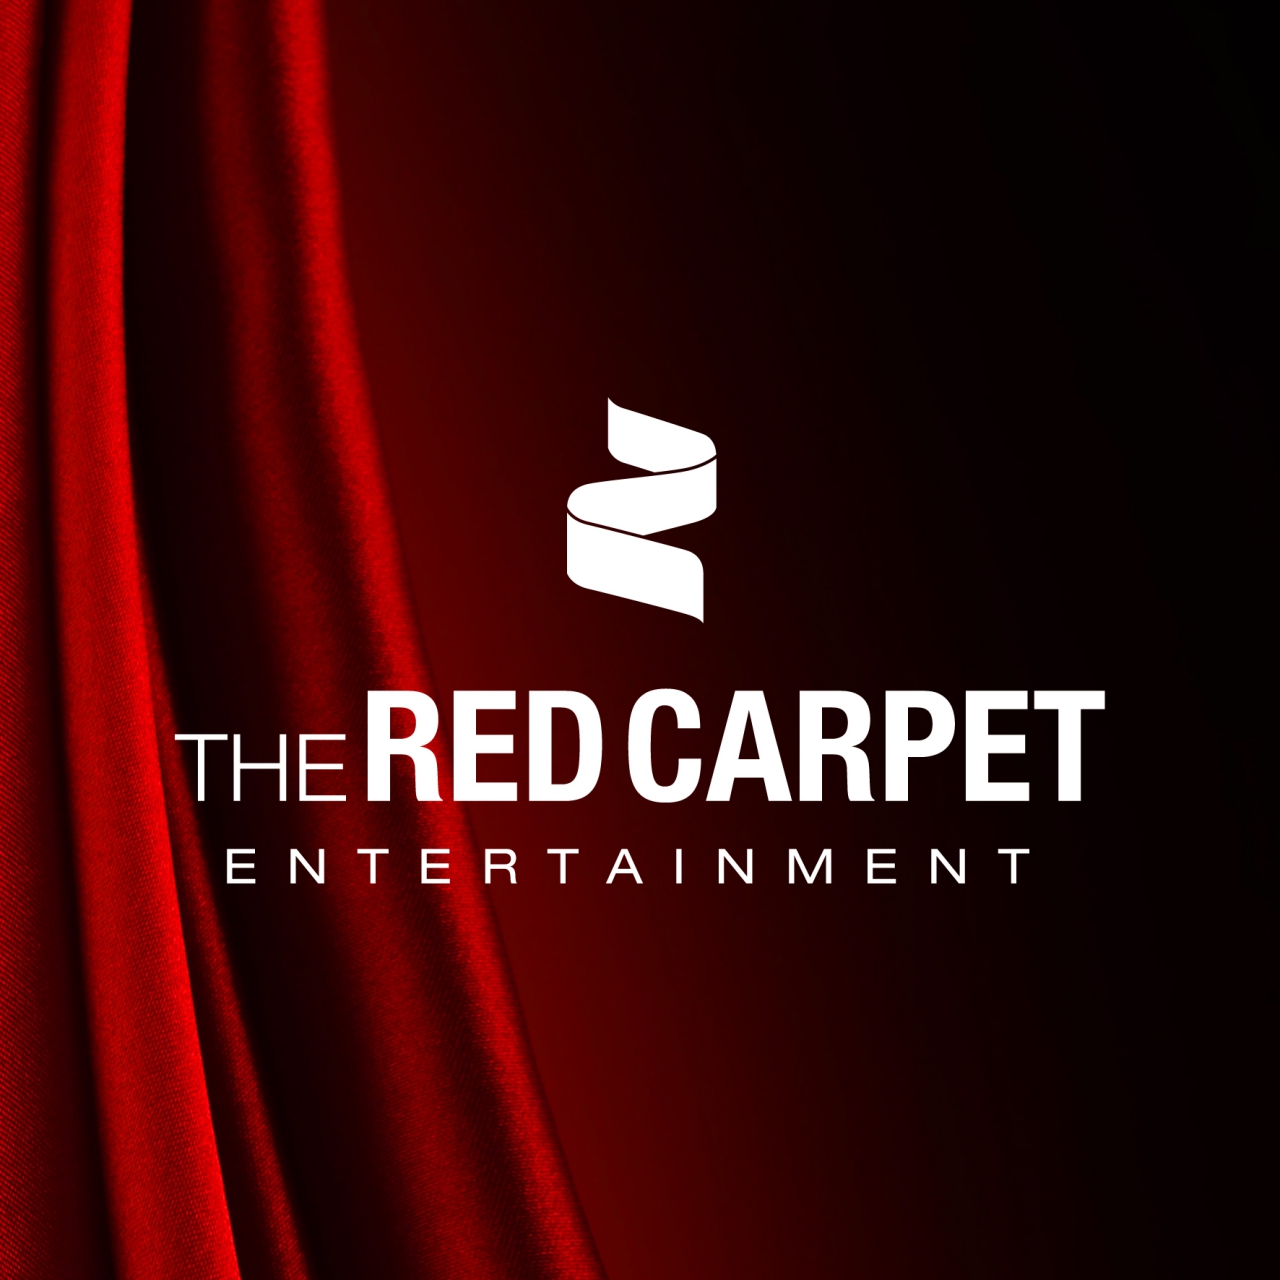 The Red Carpet Enternainment